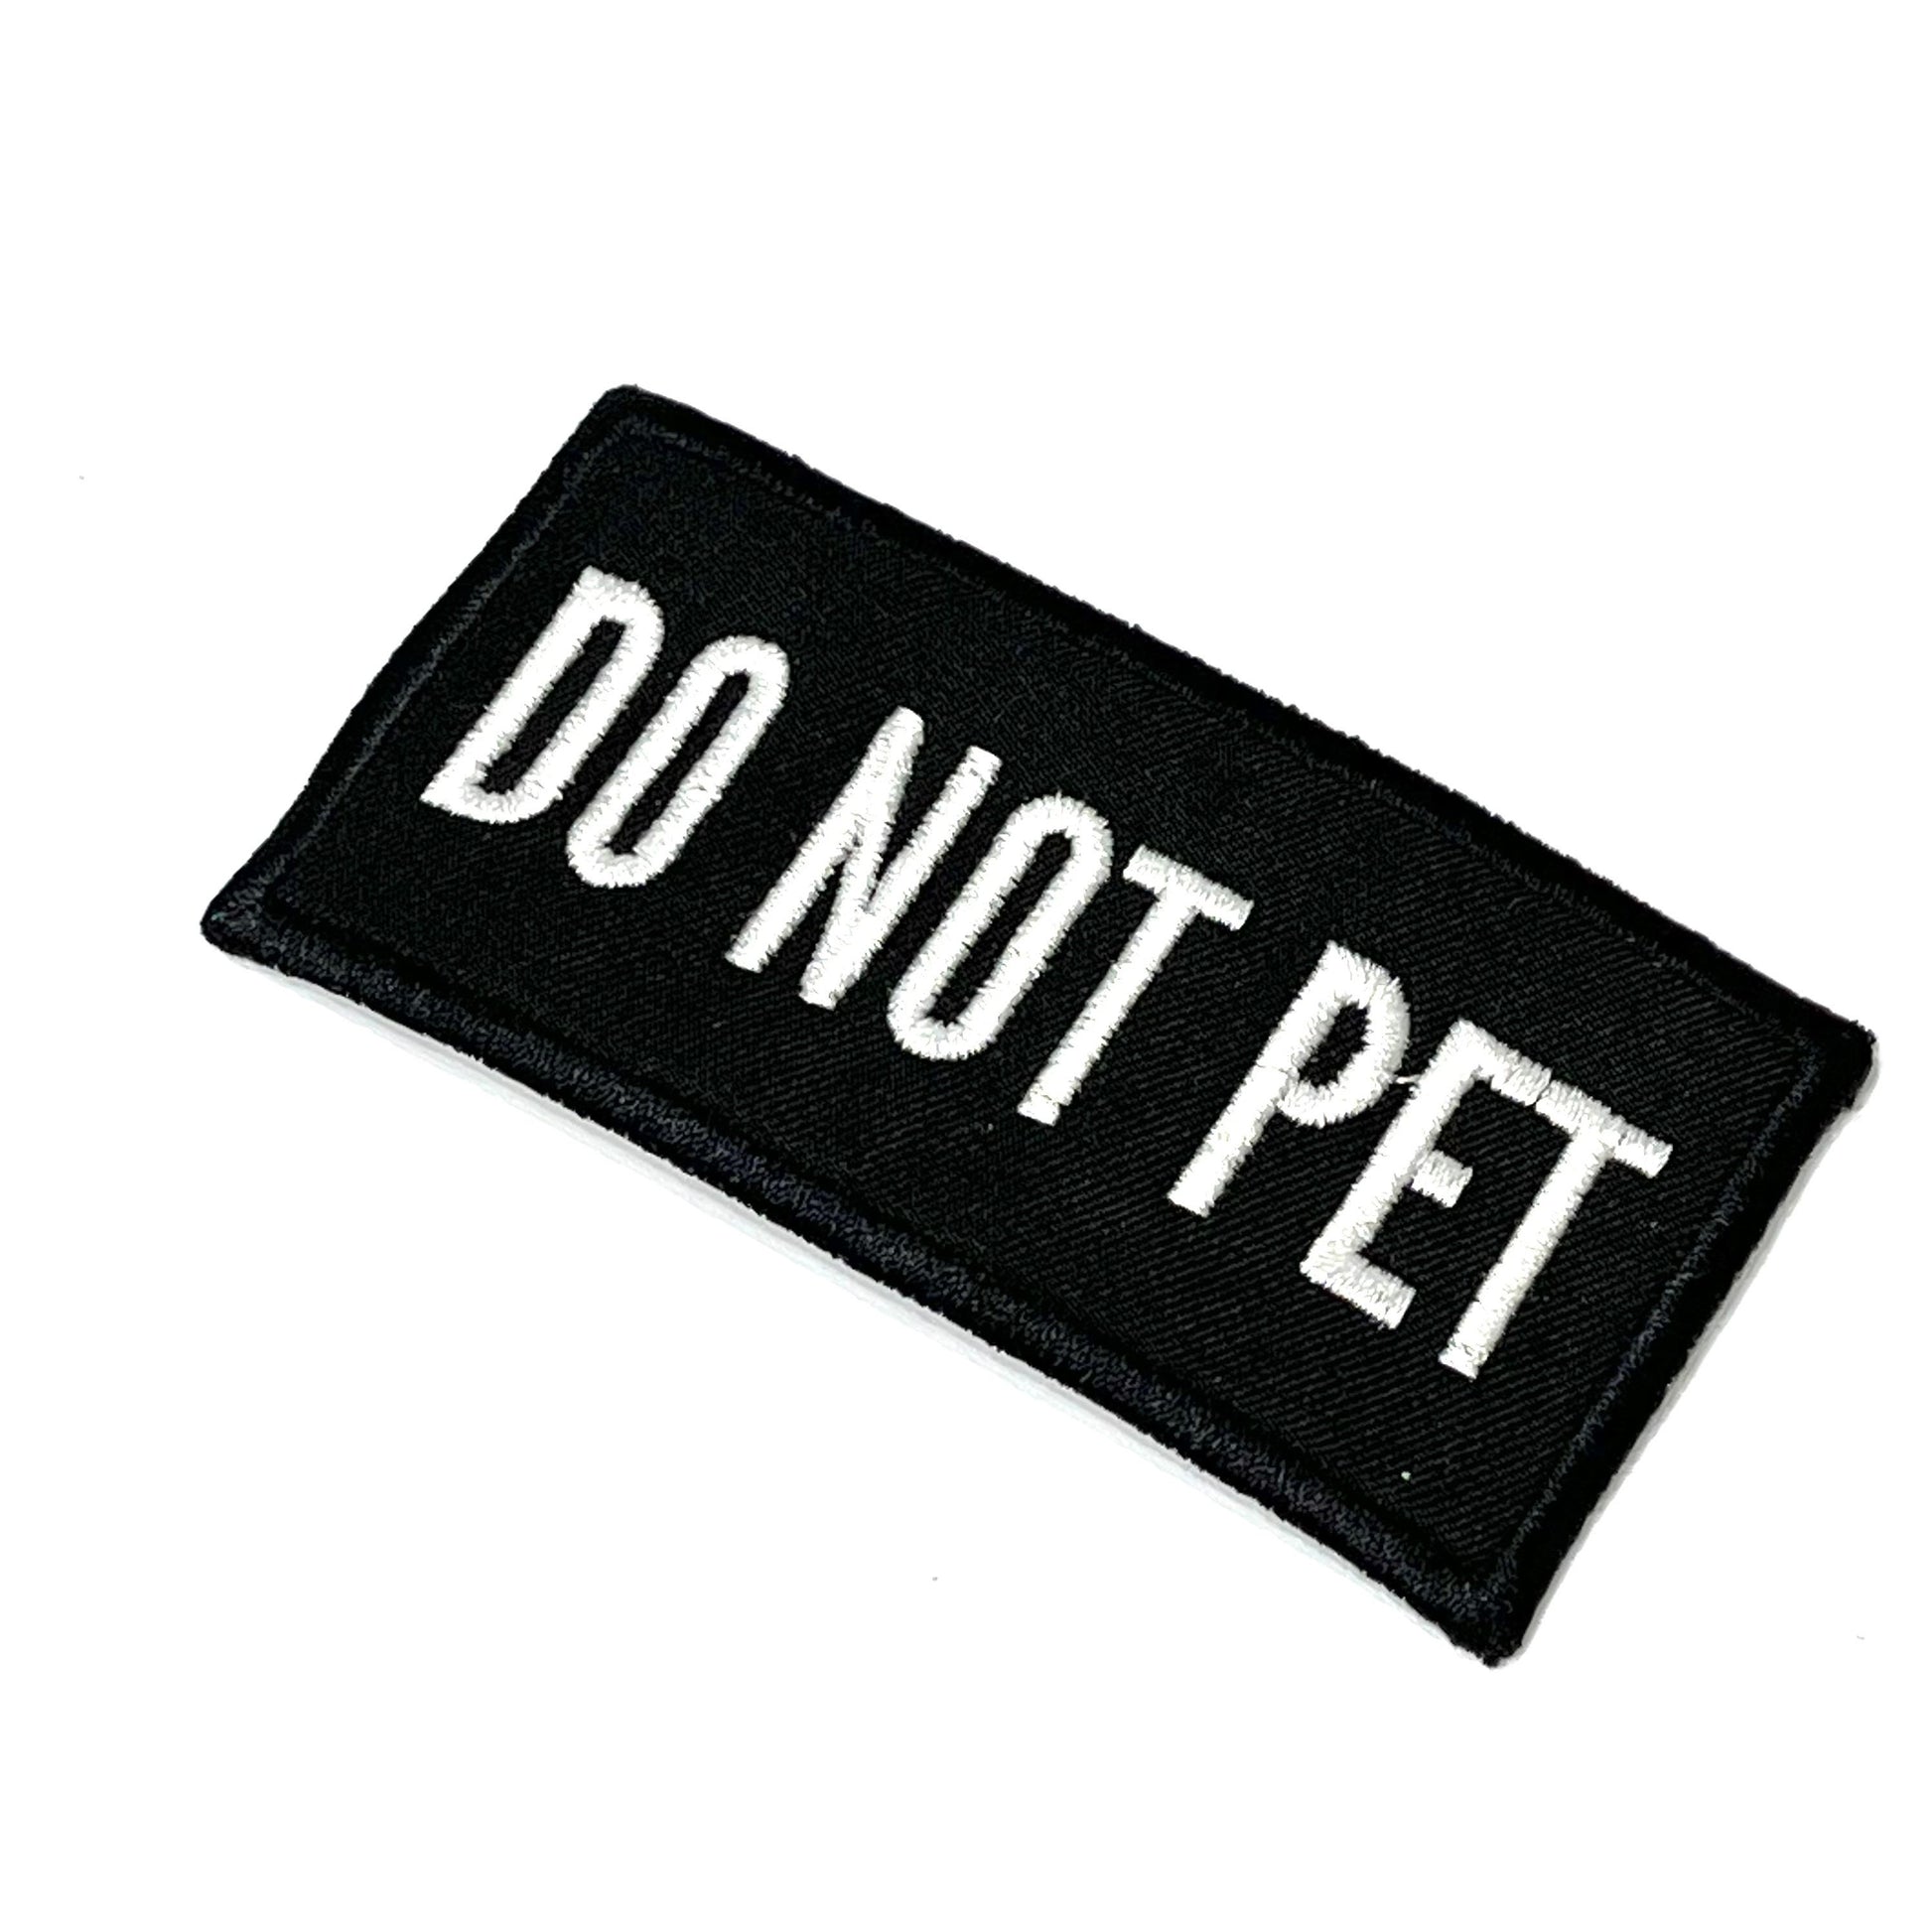 Do Not Pet Patch